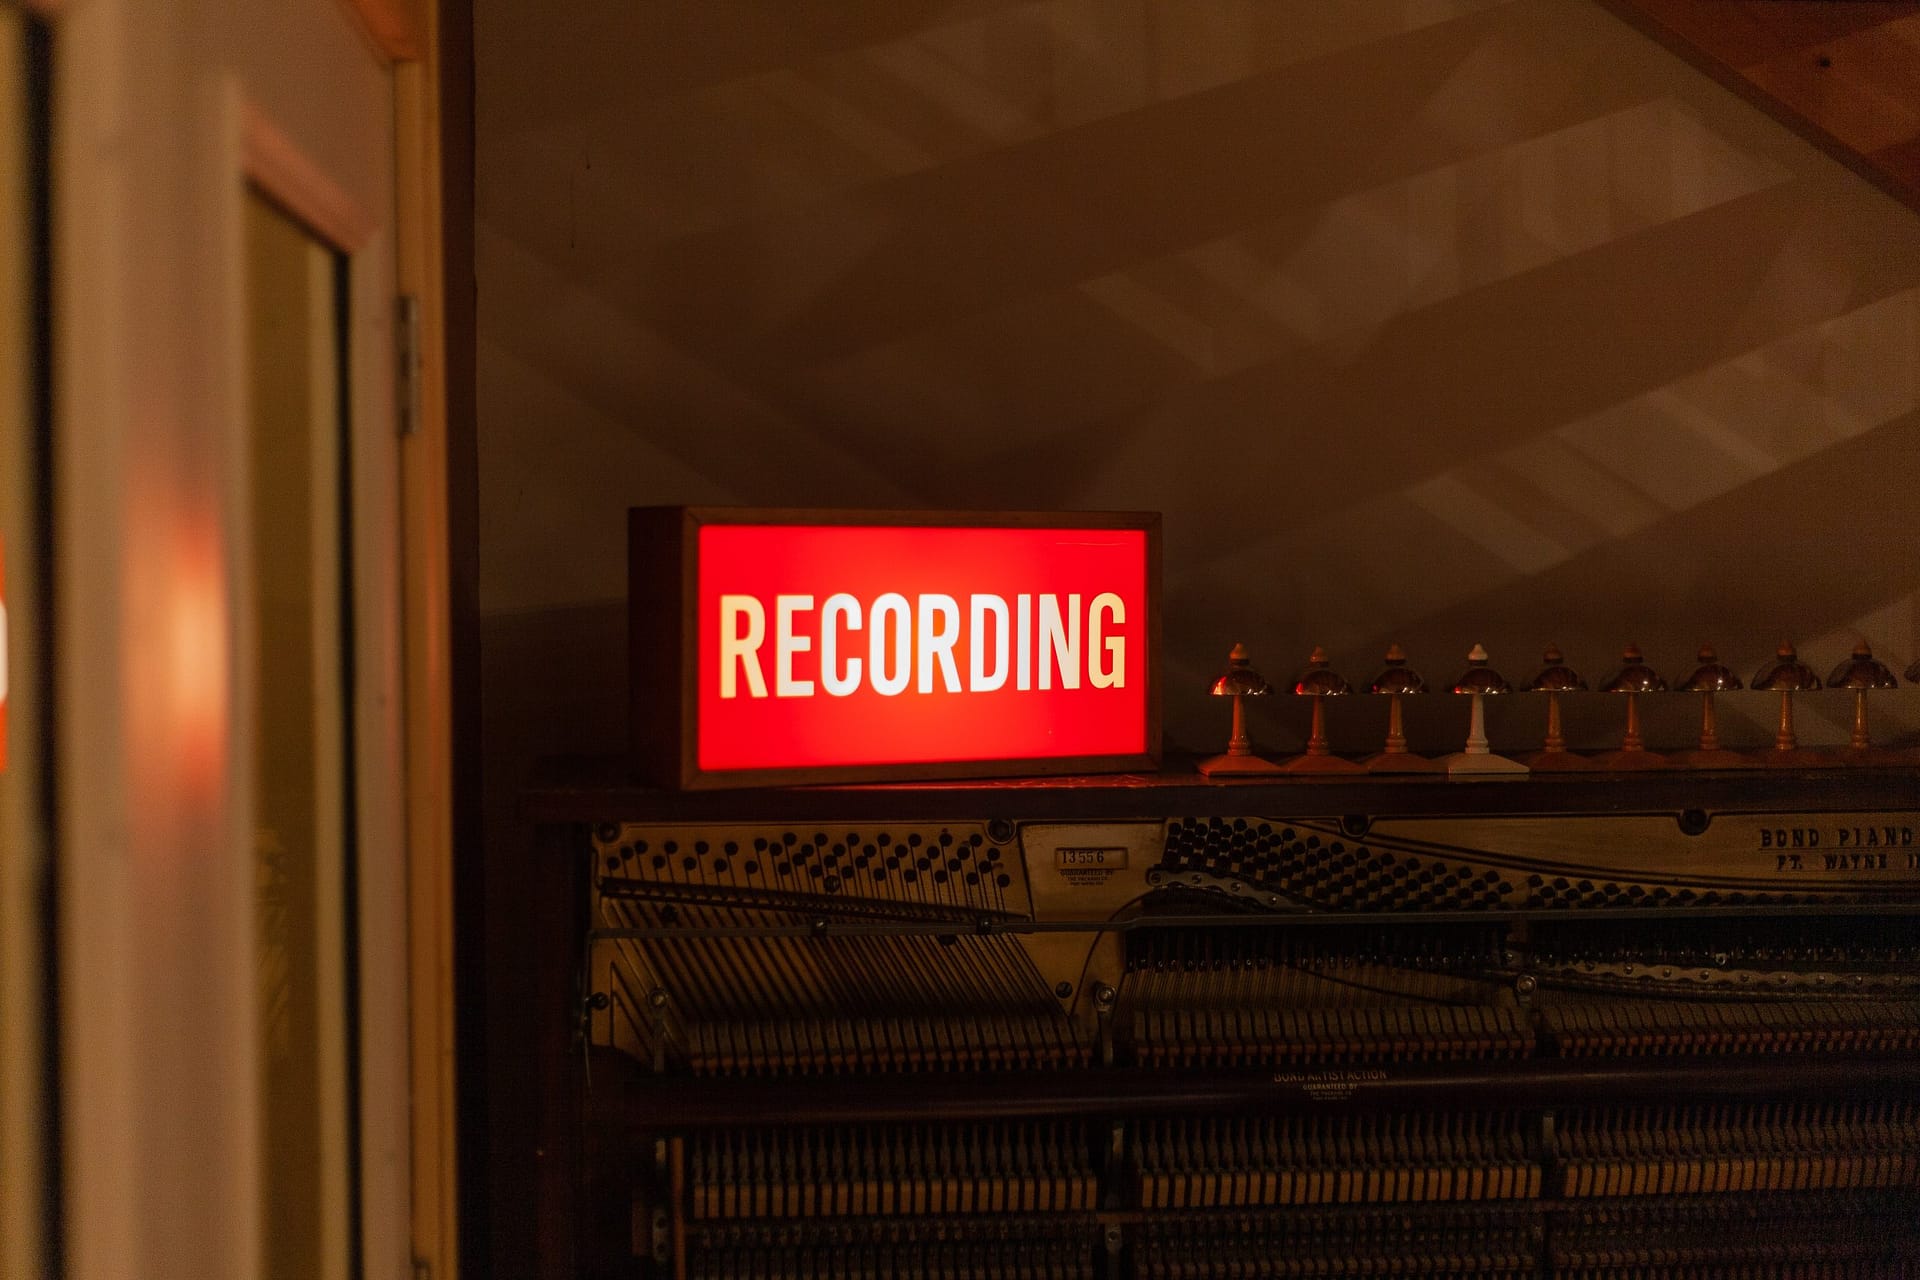 Red illuminated recording sign